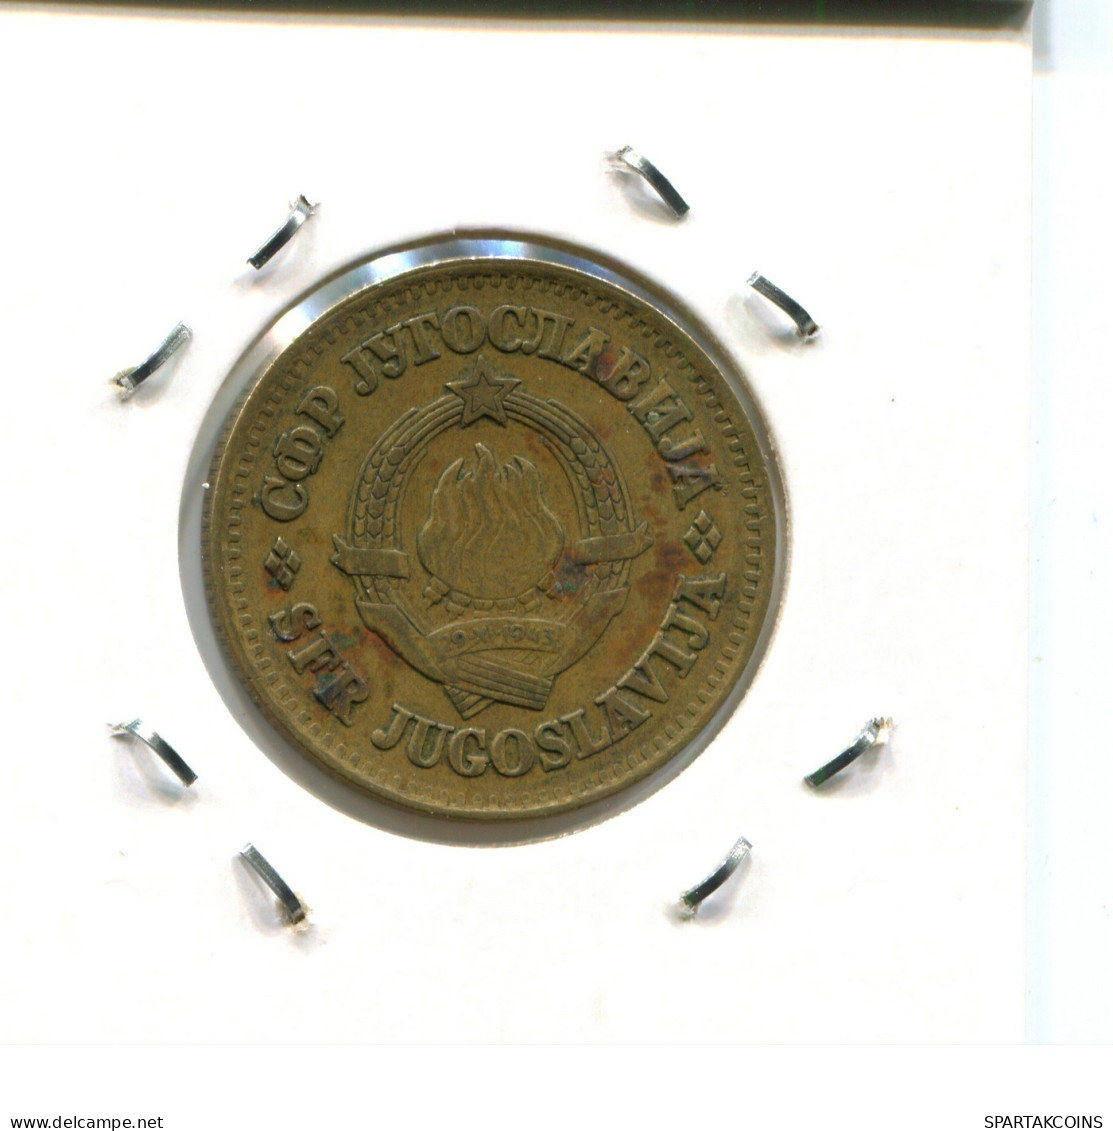 50 PARA 1975 YUGOSLAVIA Coin #AW789.U.A - Jugoslawien